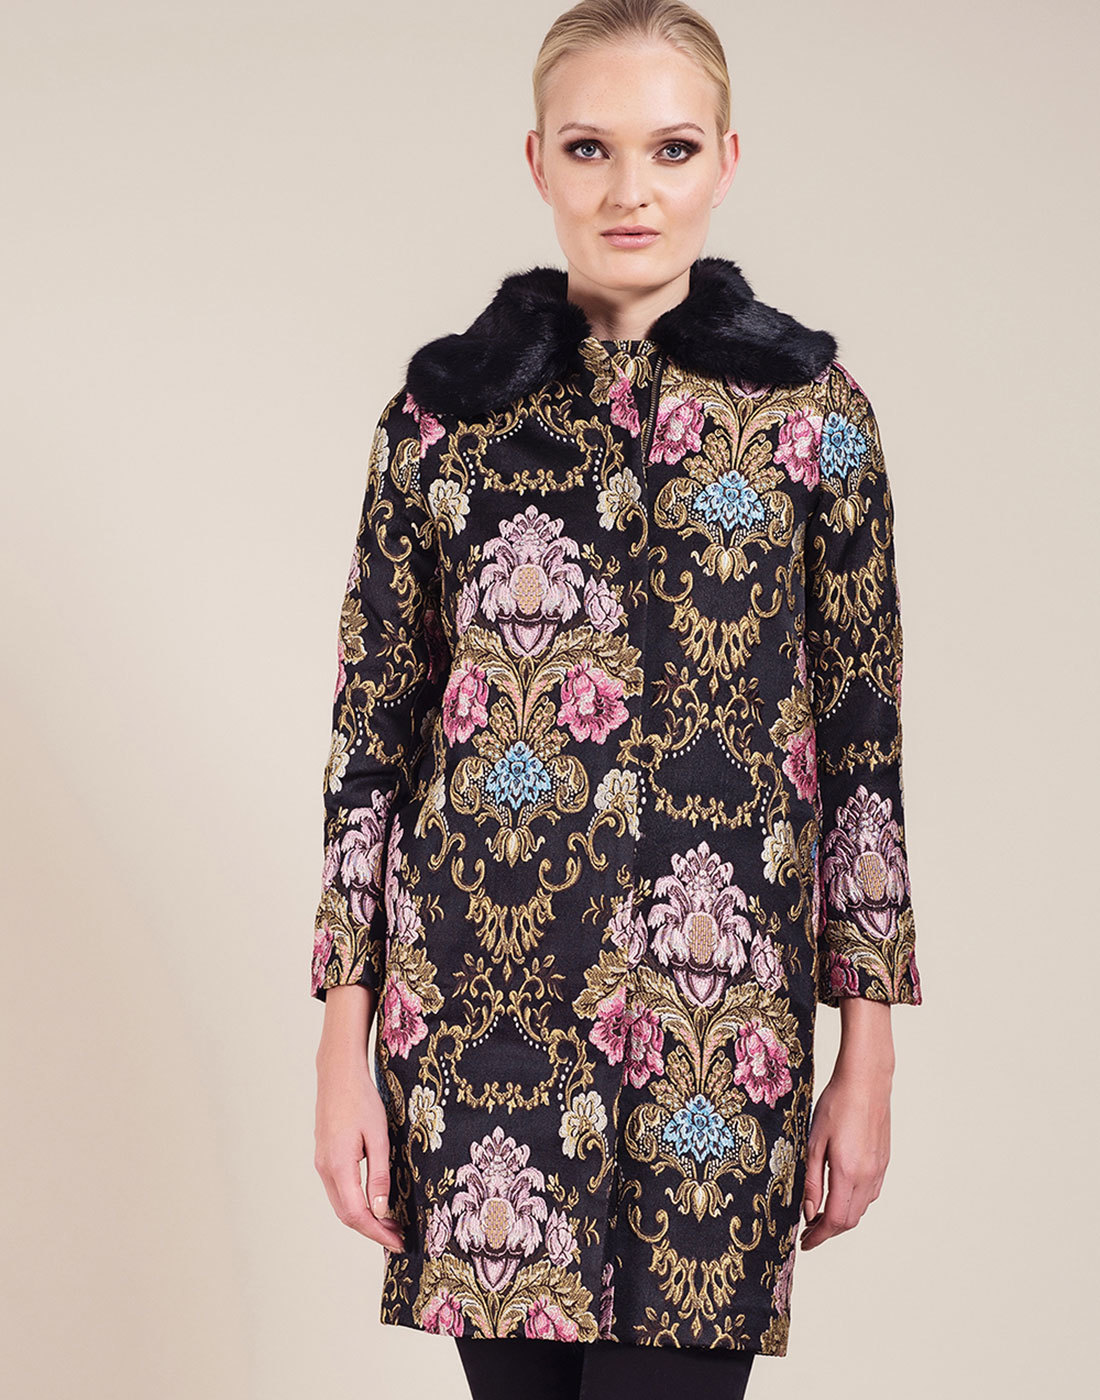 DARLING Hepburn Retro Vintage Embroidered Women's Coat in Black